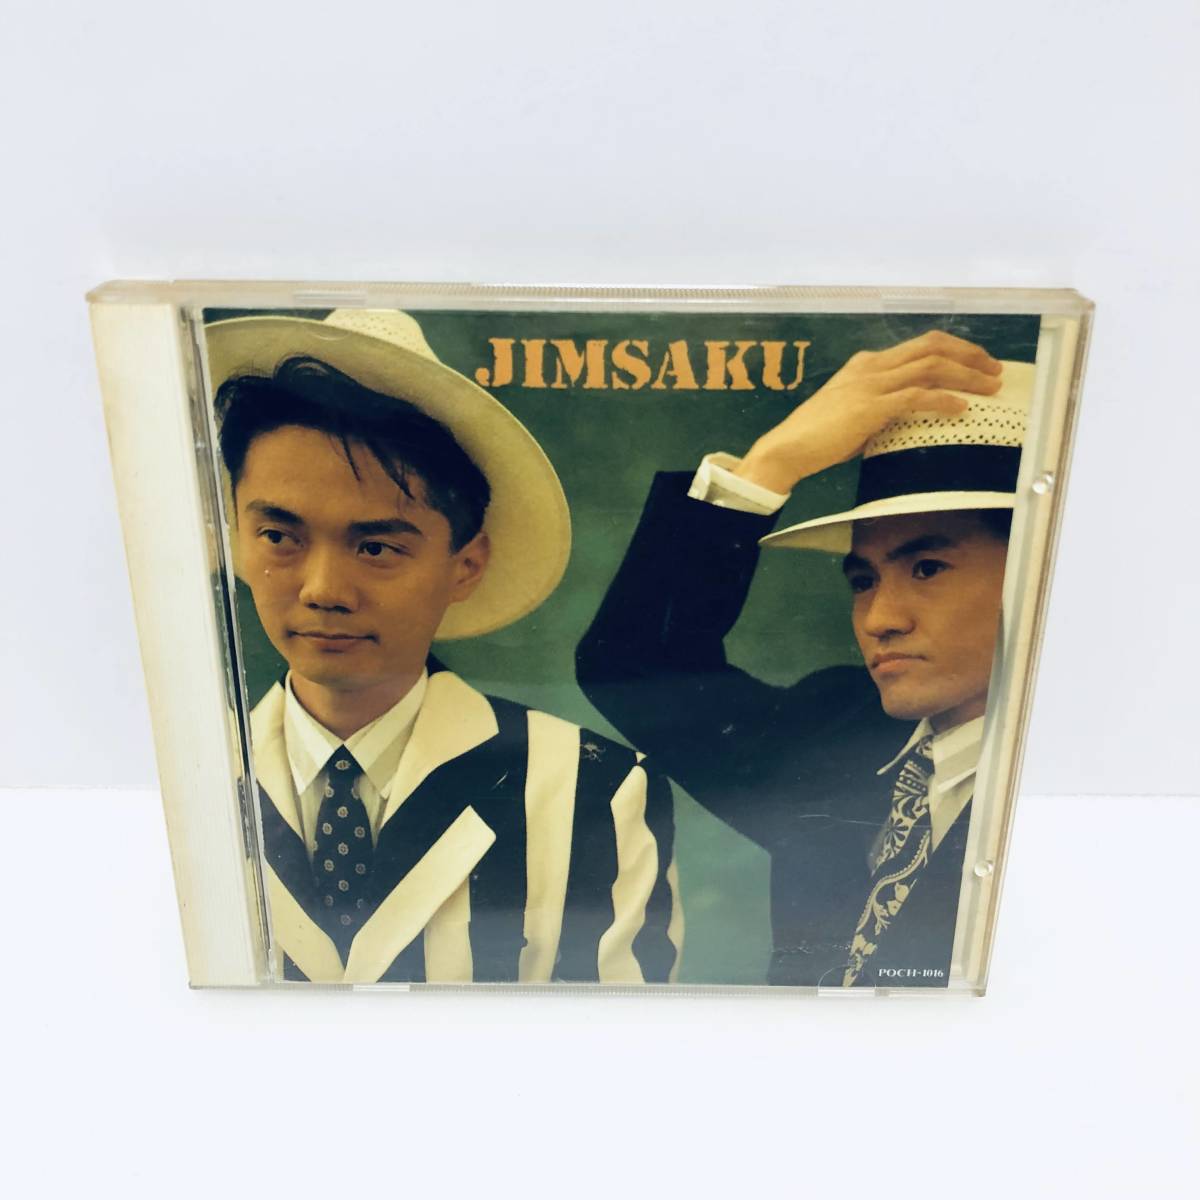 【CD】JIMSAKU / ジンサク 神保彰 櫻井哲夫 90年盤 インストゥルメンタル アルバム POCH-1016 ※その他CDも出品中です！同梱承ります。